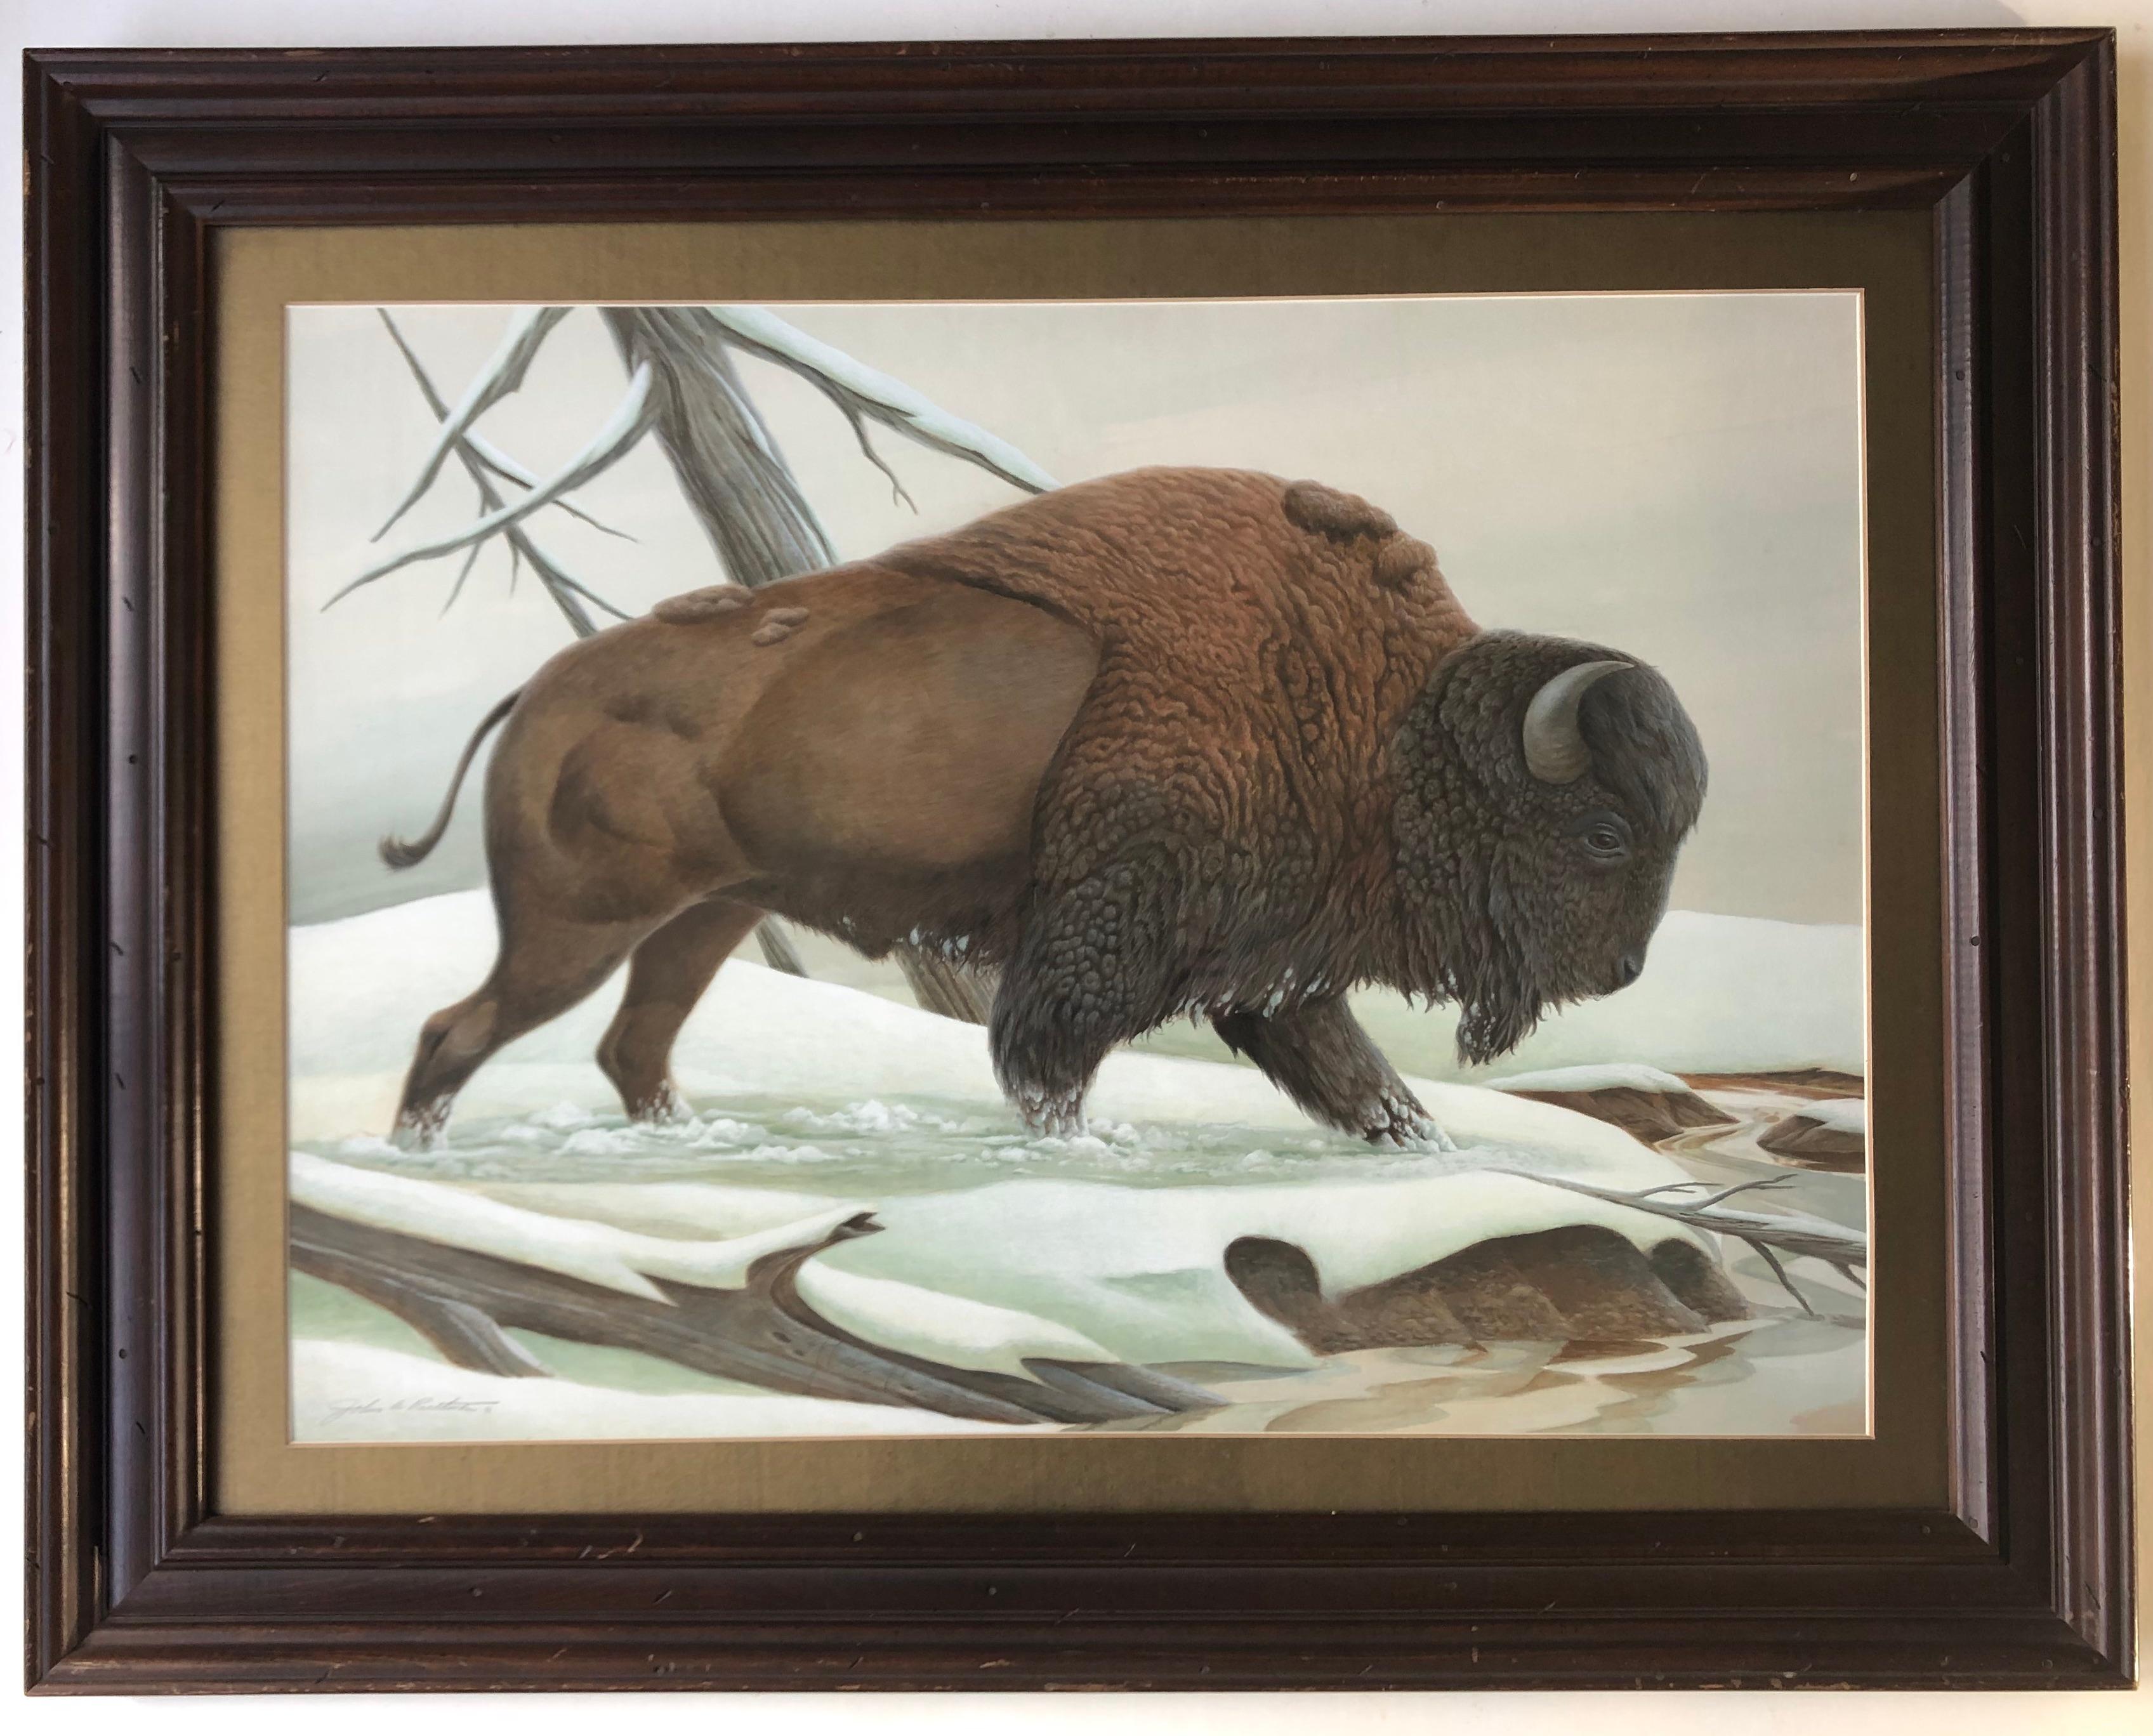 John Ruthven Animal Art - Bison in Snow, Animal Picture, American School, John Aldrich Ruthven, signed